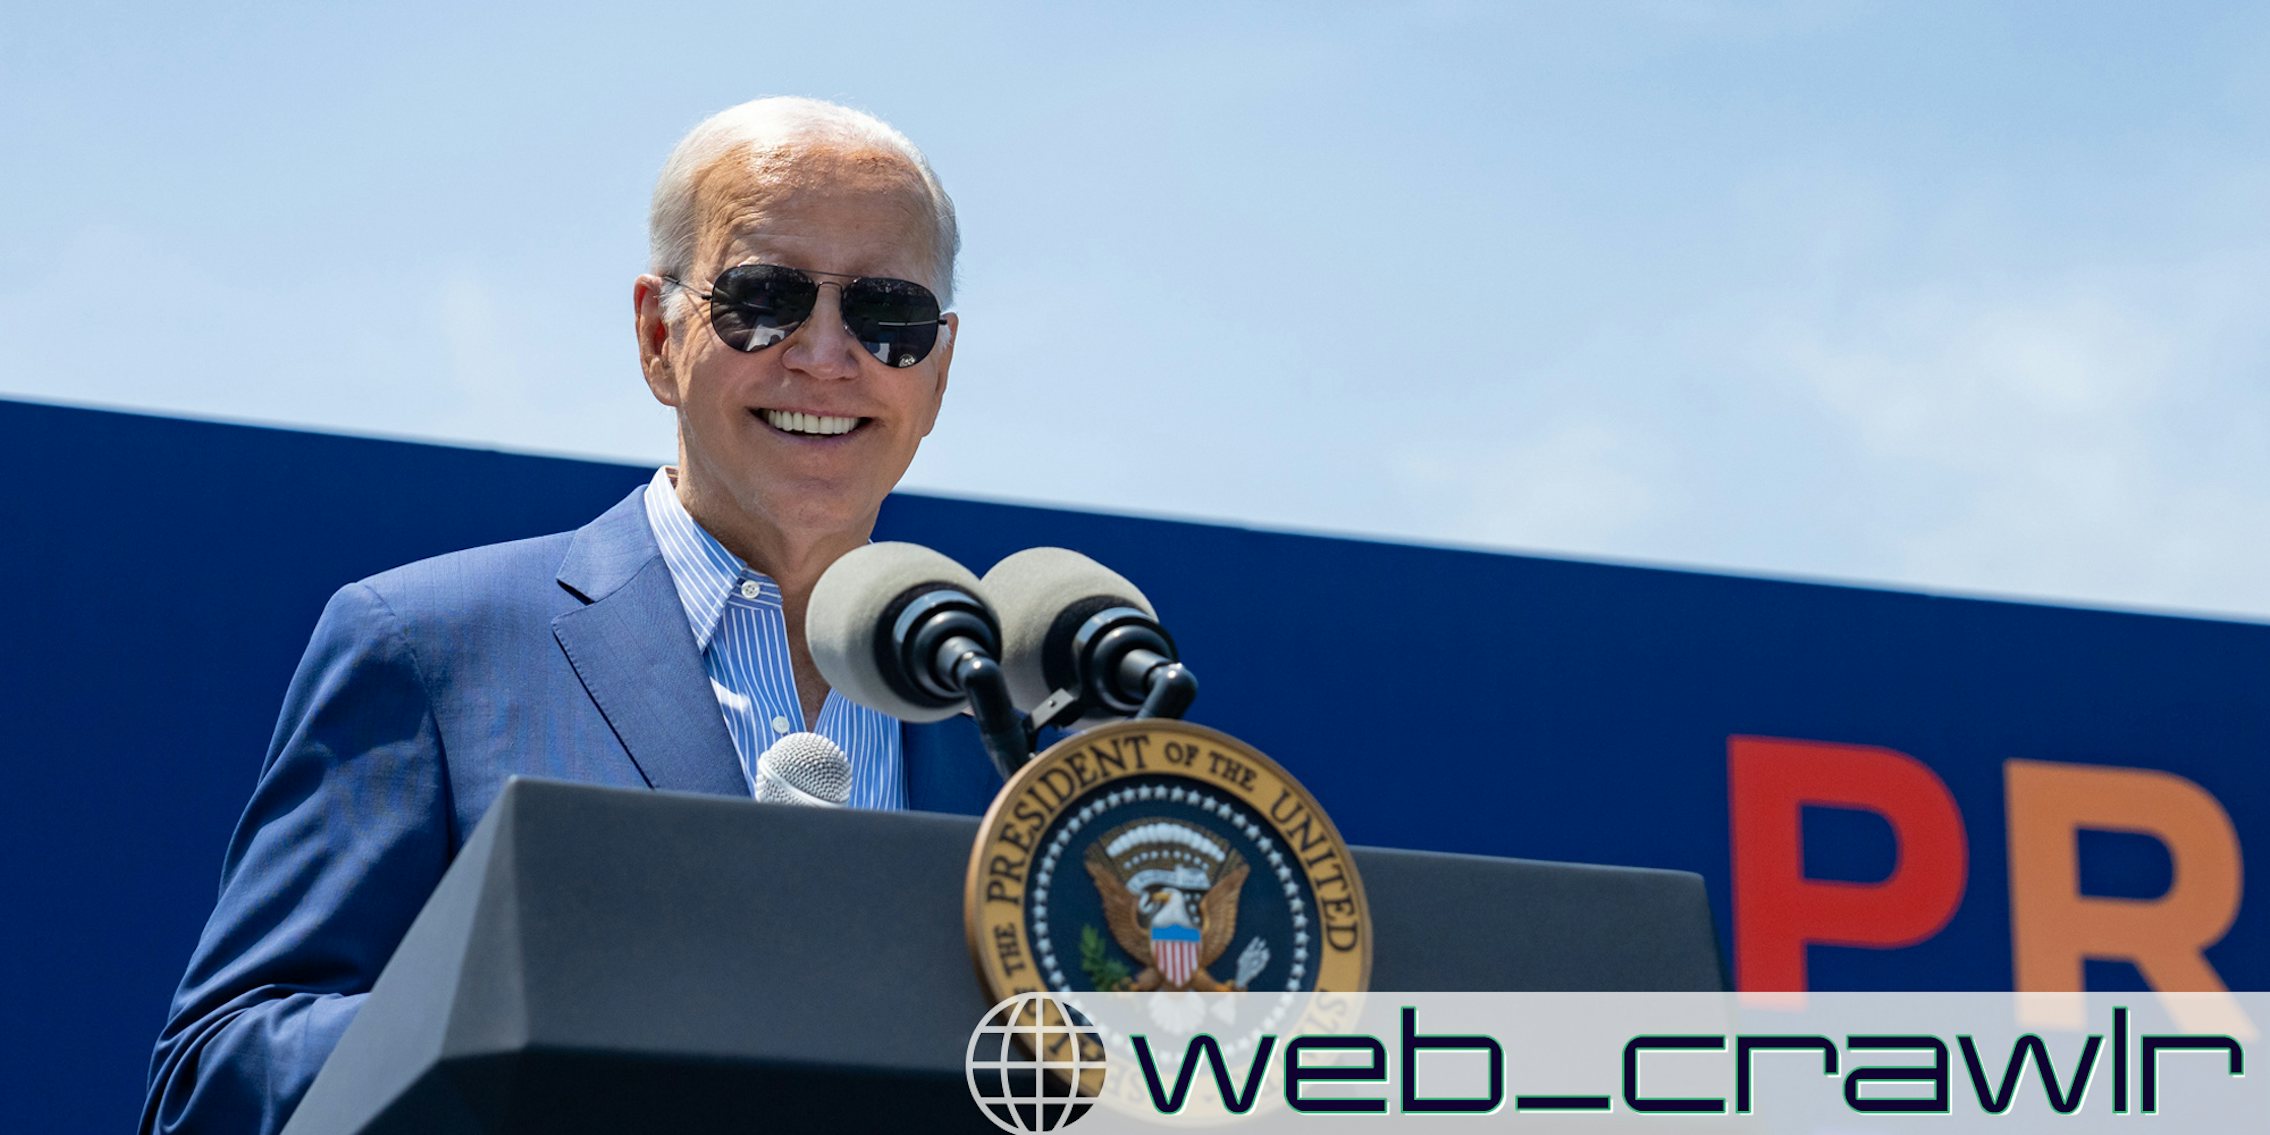 Joe Biden speaking at a podium. The Daily Dot newsletter web_crawlr logo is in the bottom right corner.